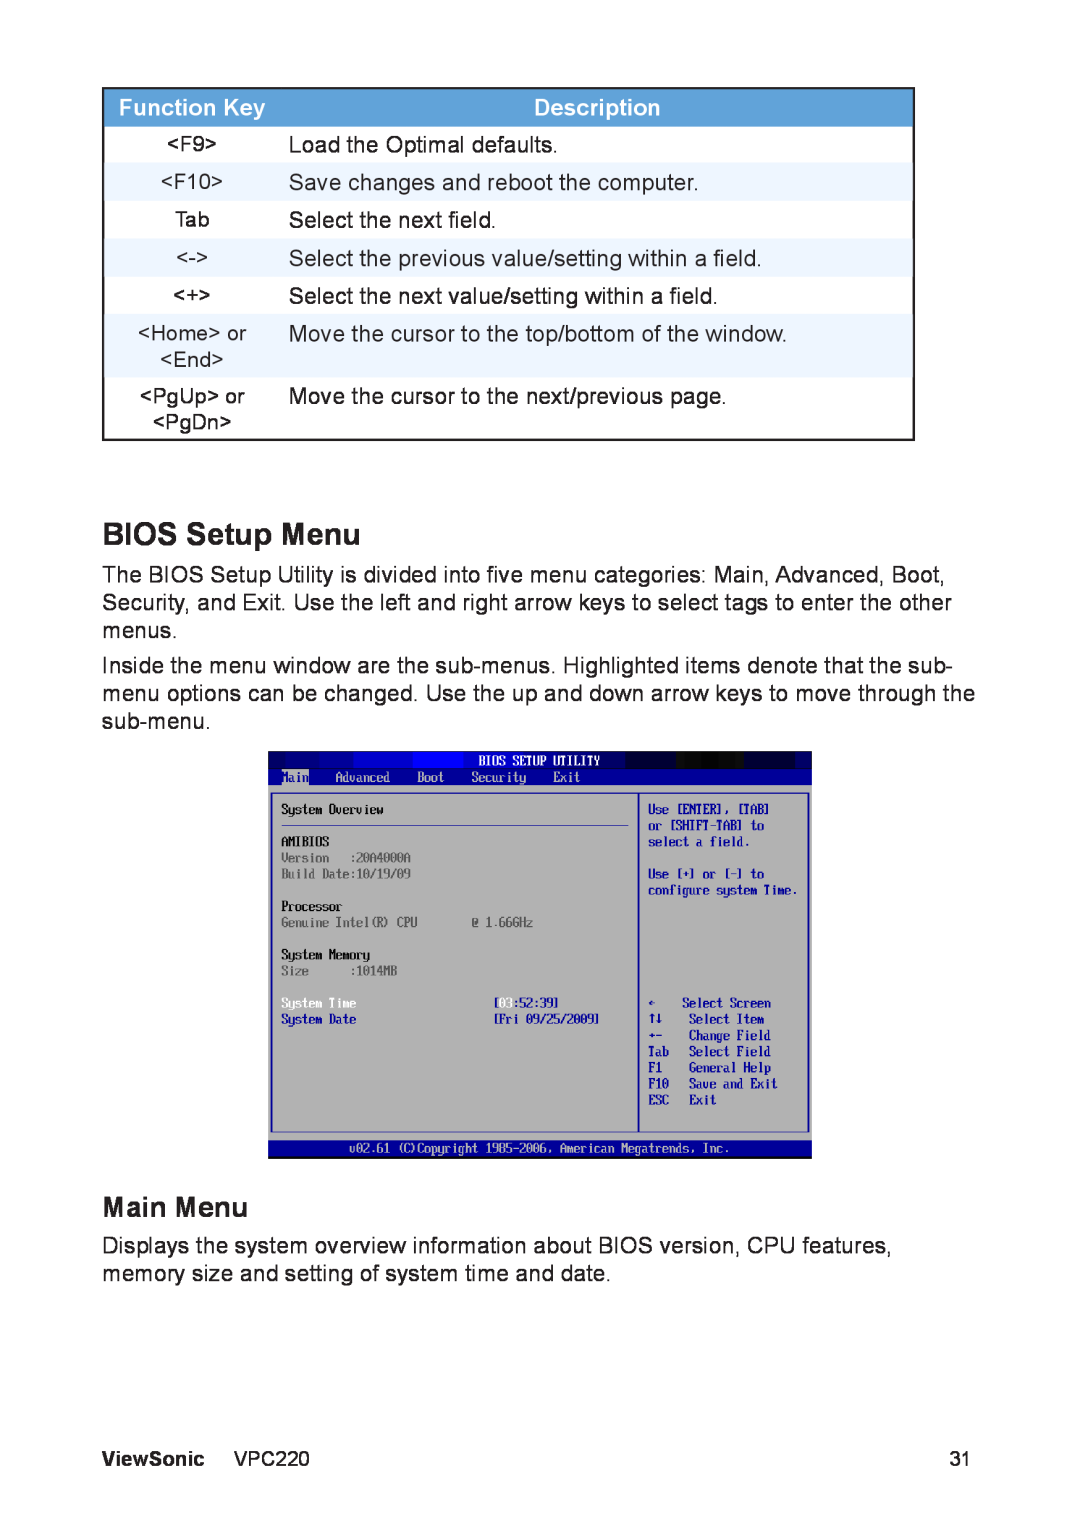 ViewSonic VS13426 manual BIOS Setup Menu, Main Menu, Function Key, Description 